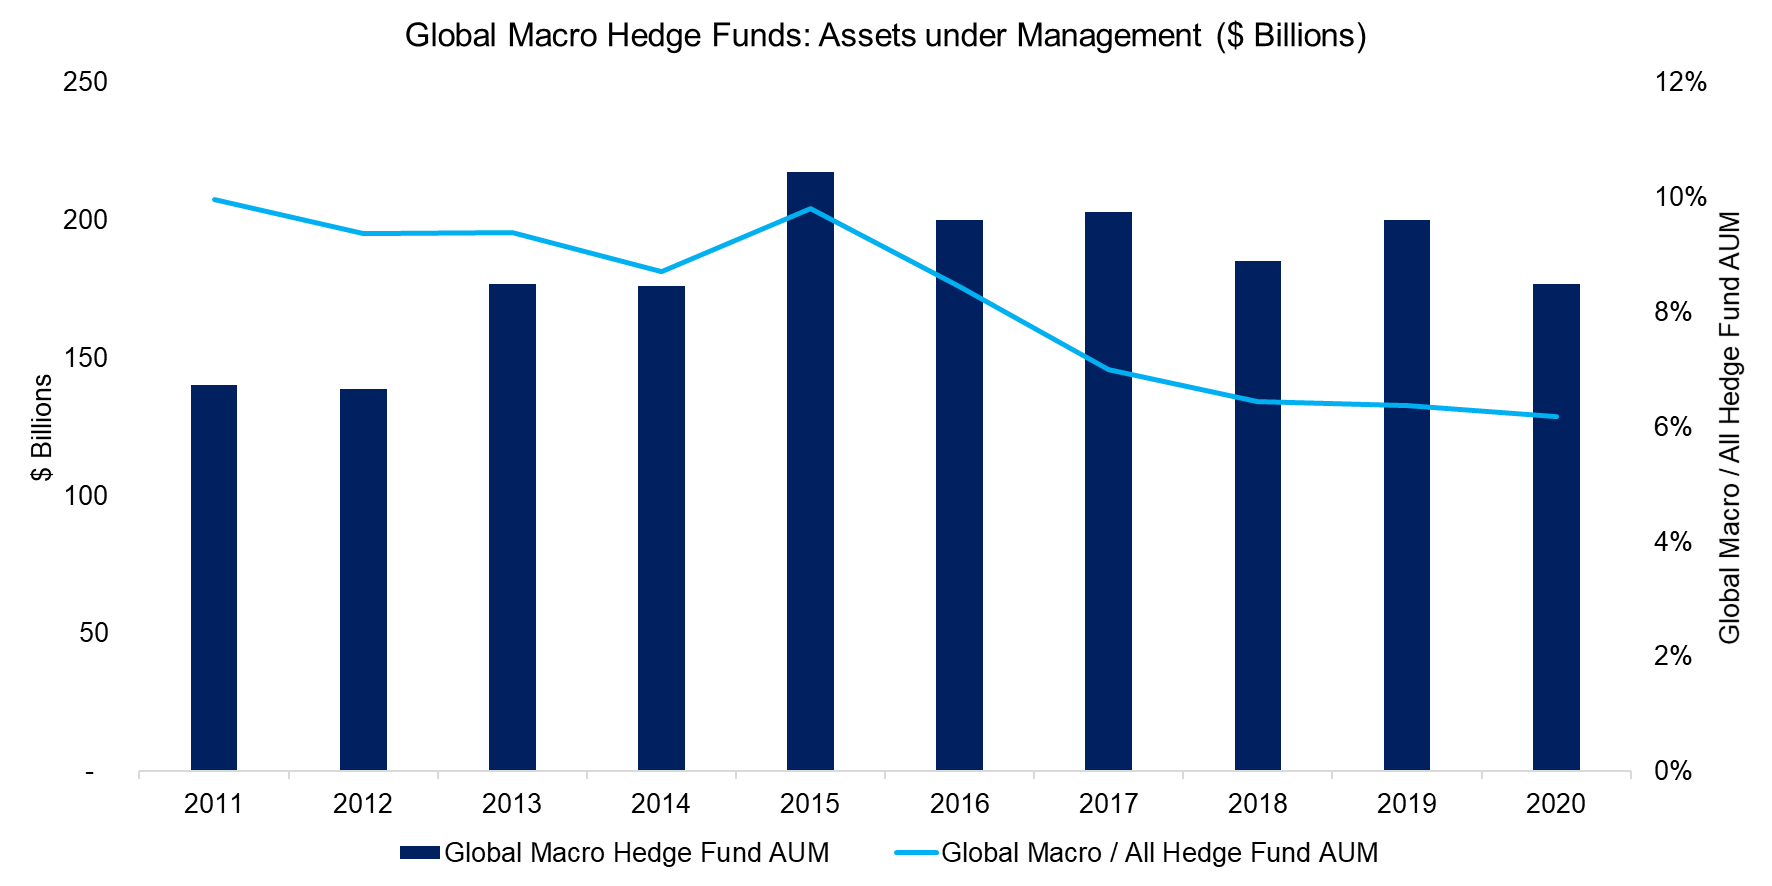 Global Macro Hedge Funds Assets under Management ($ Billions)